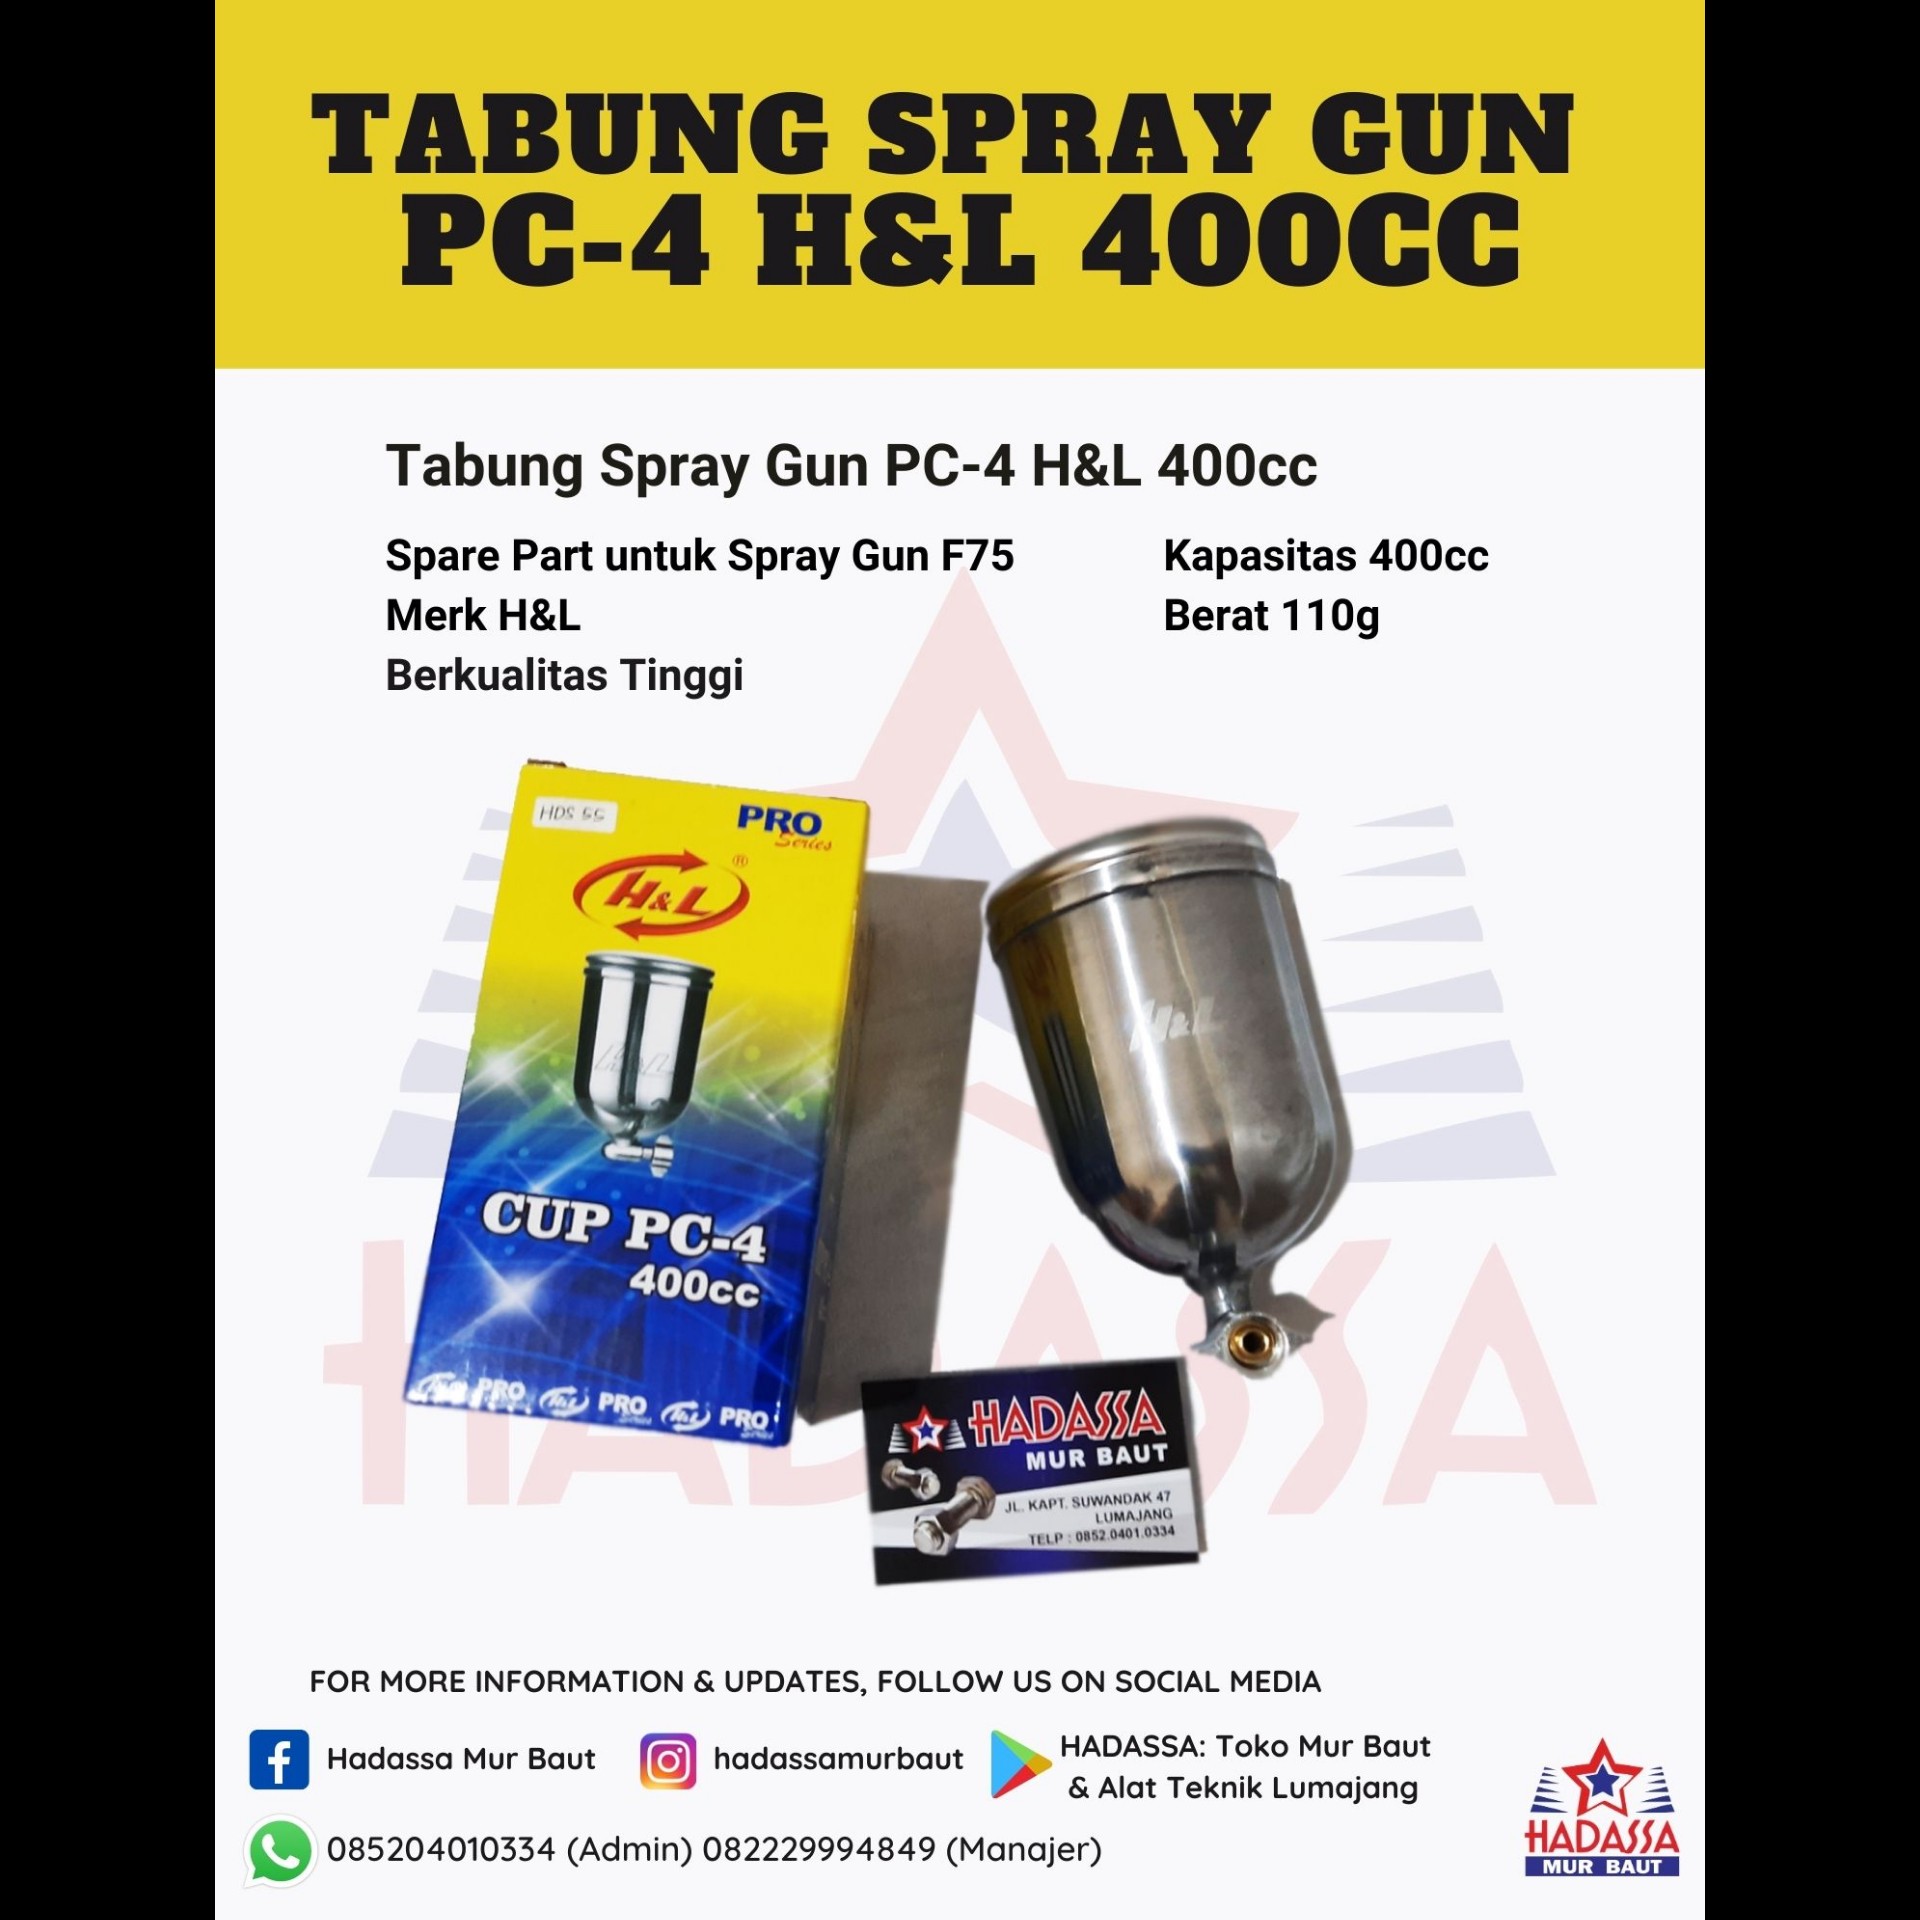 Tabung Spray Gun PC-4 HL 400cc